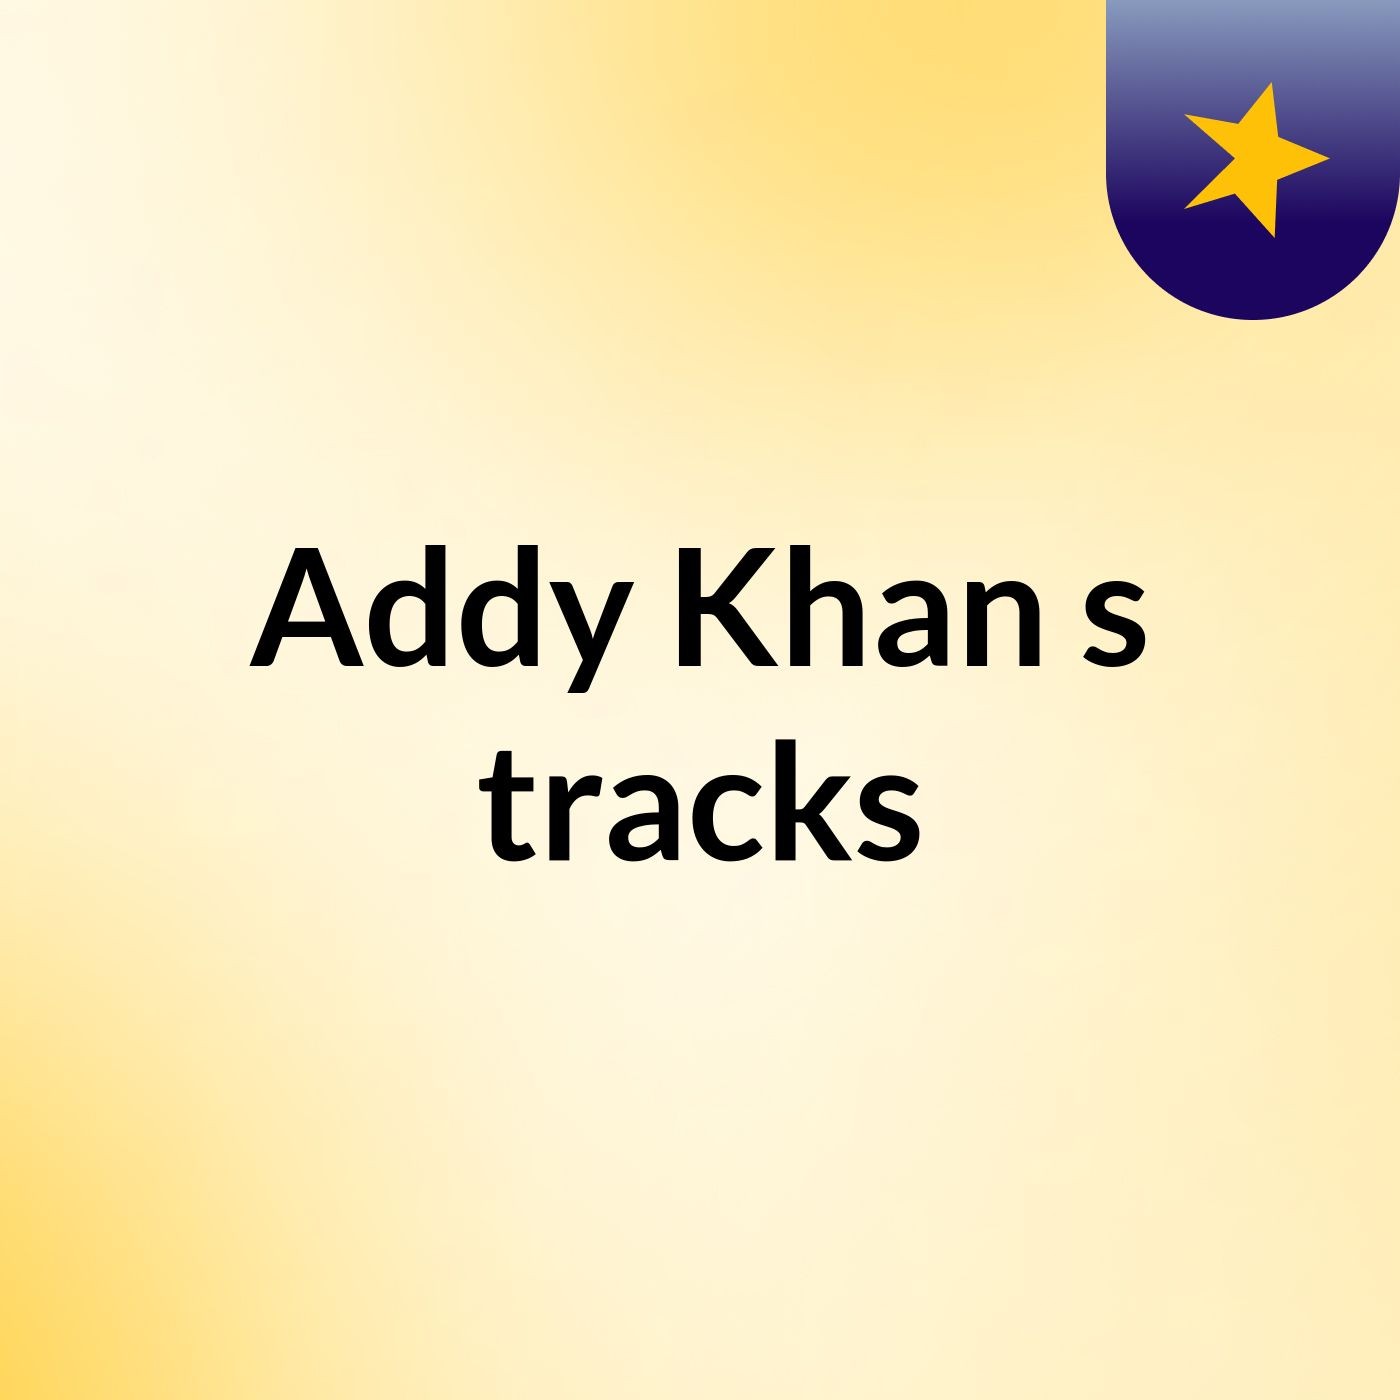 Addy Khan's tracks